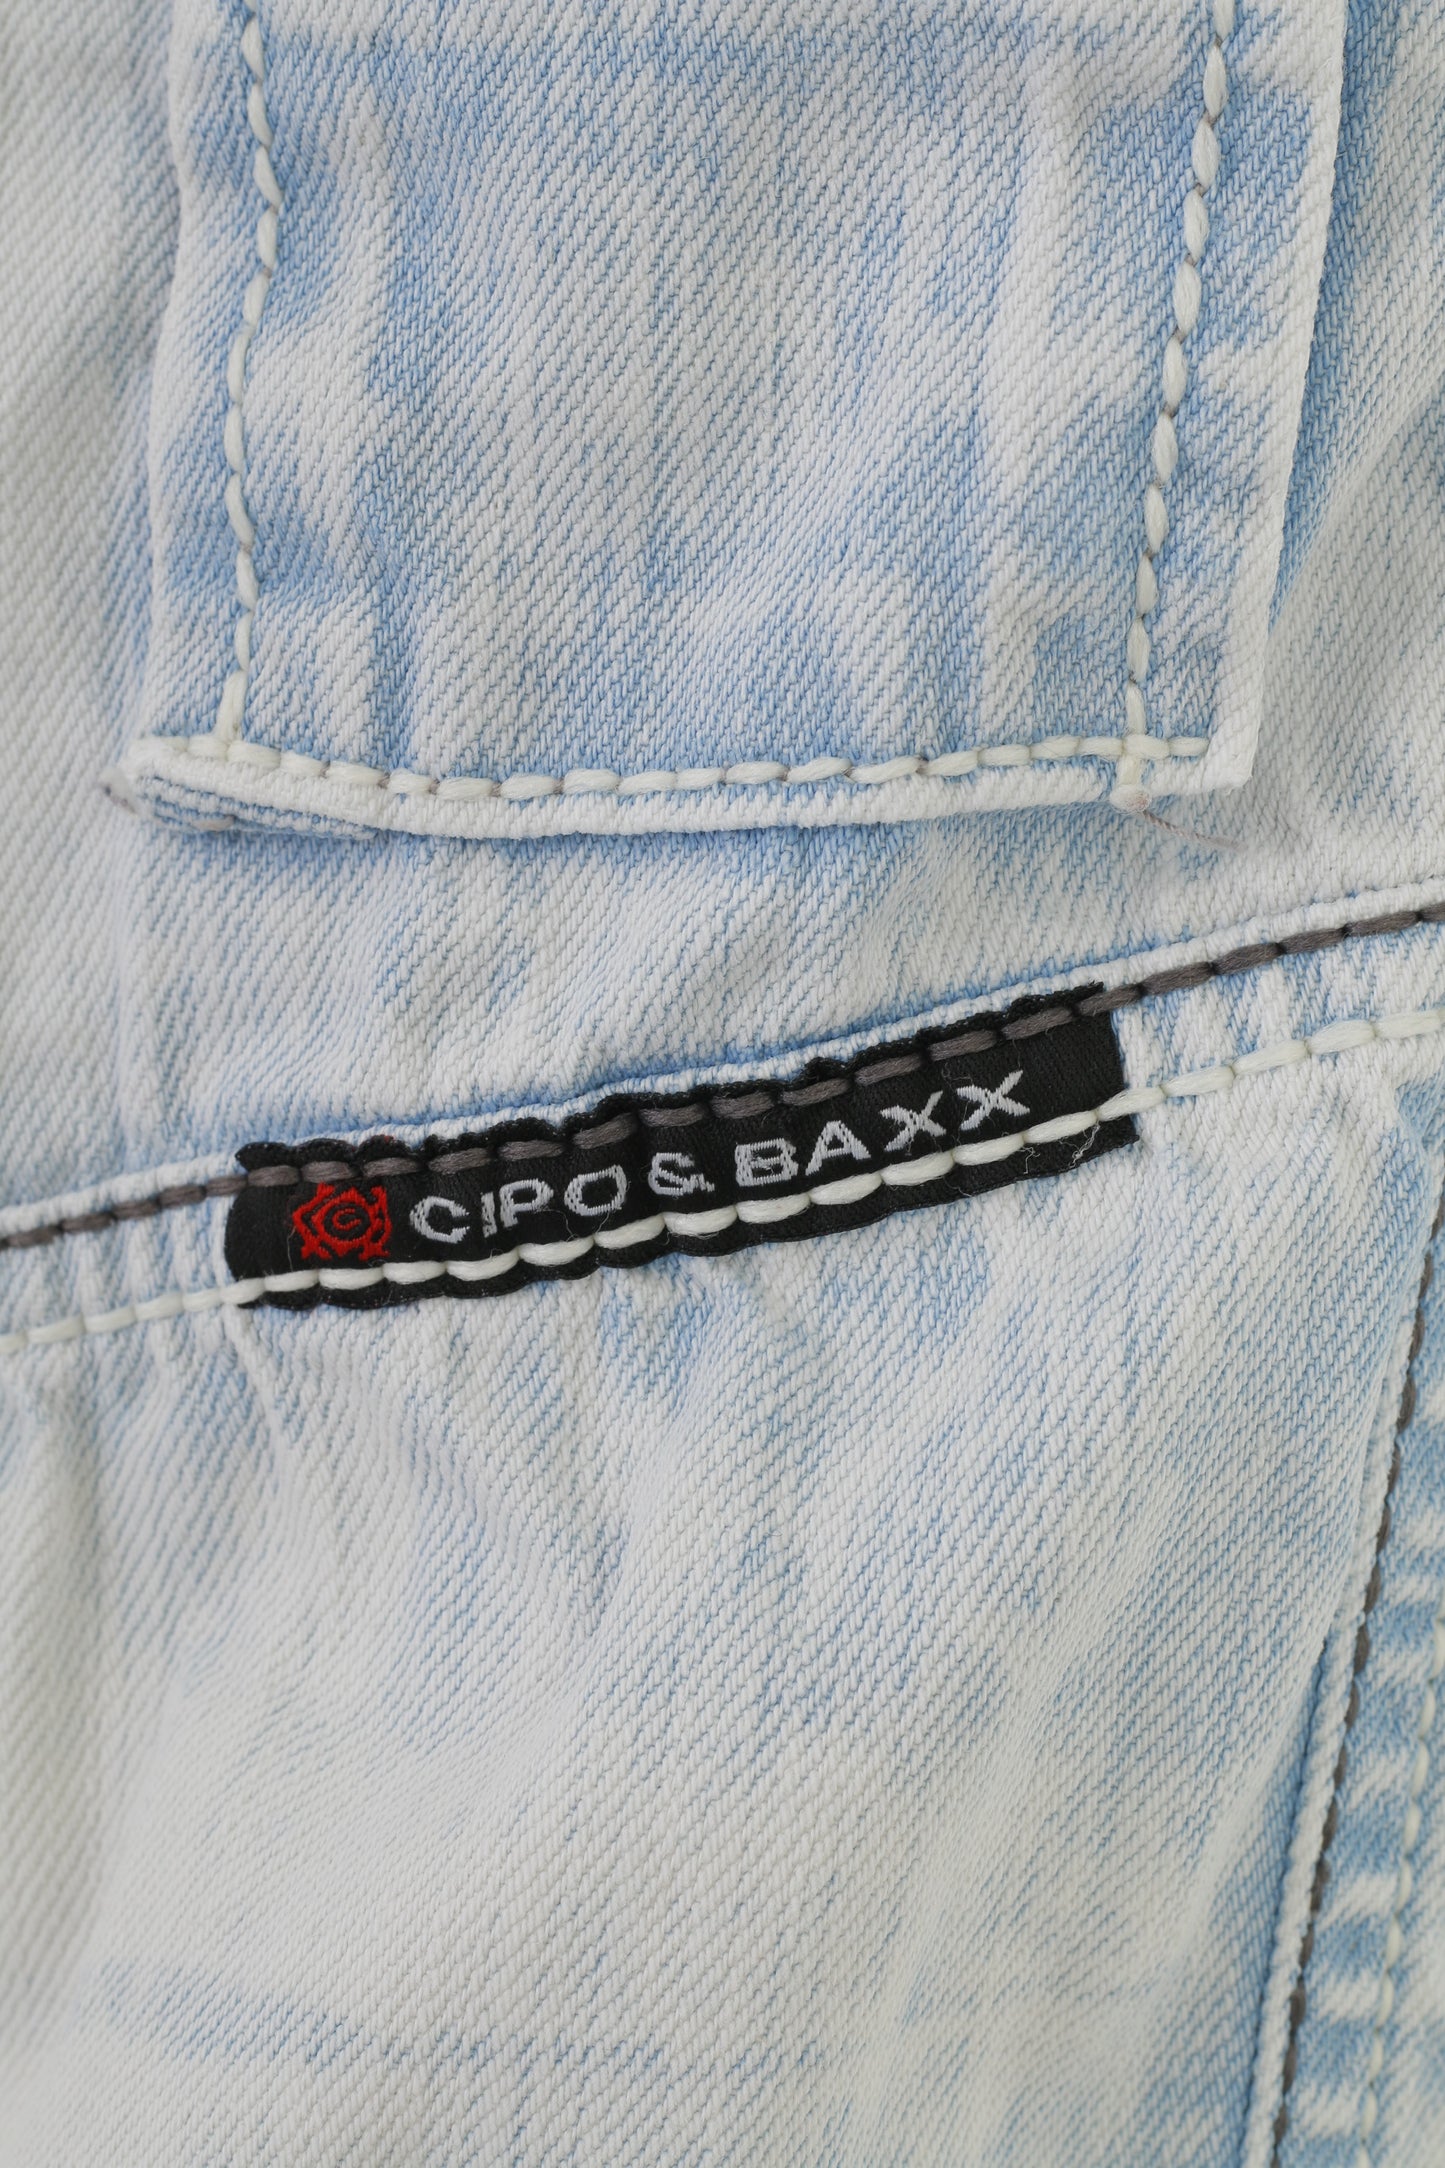 Cipo&Baxx Men 32 Trousers Jeans Blue Washed Look Cotton Pockets Bottoms Low Waist Vintage